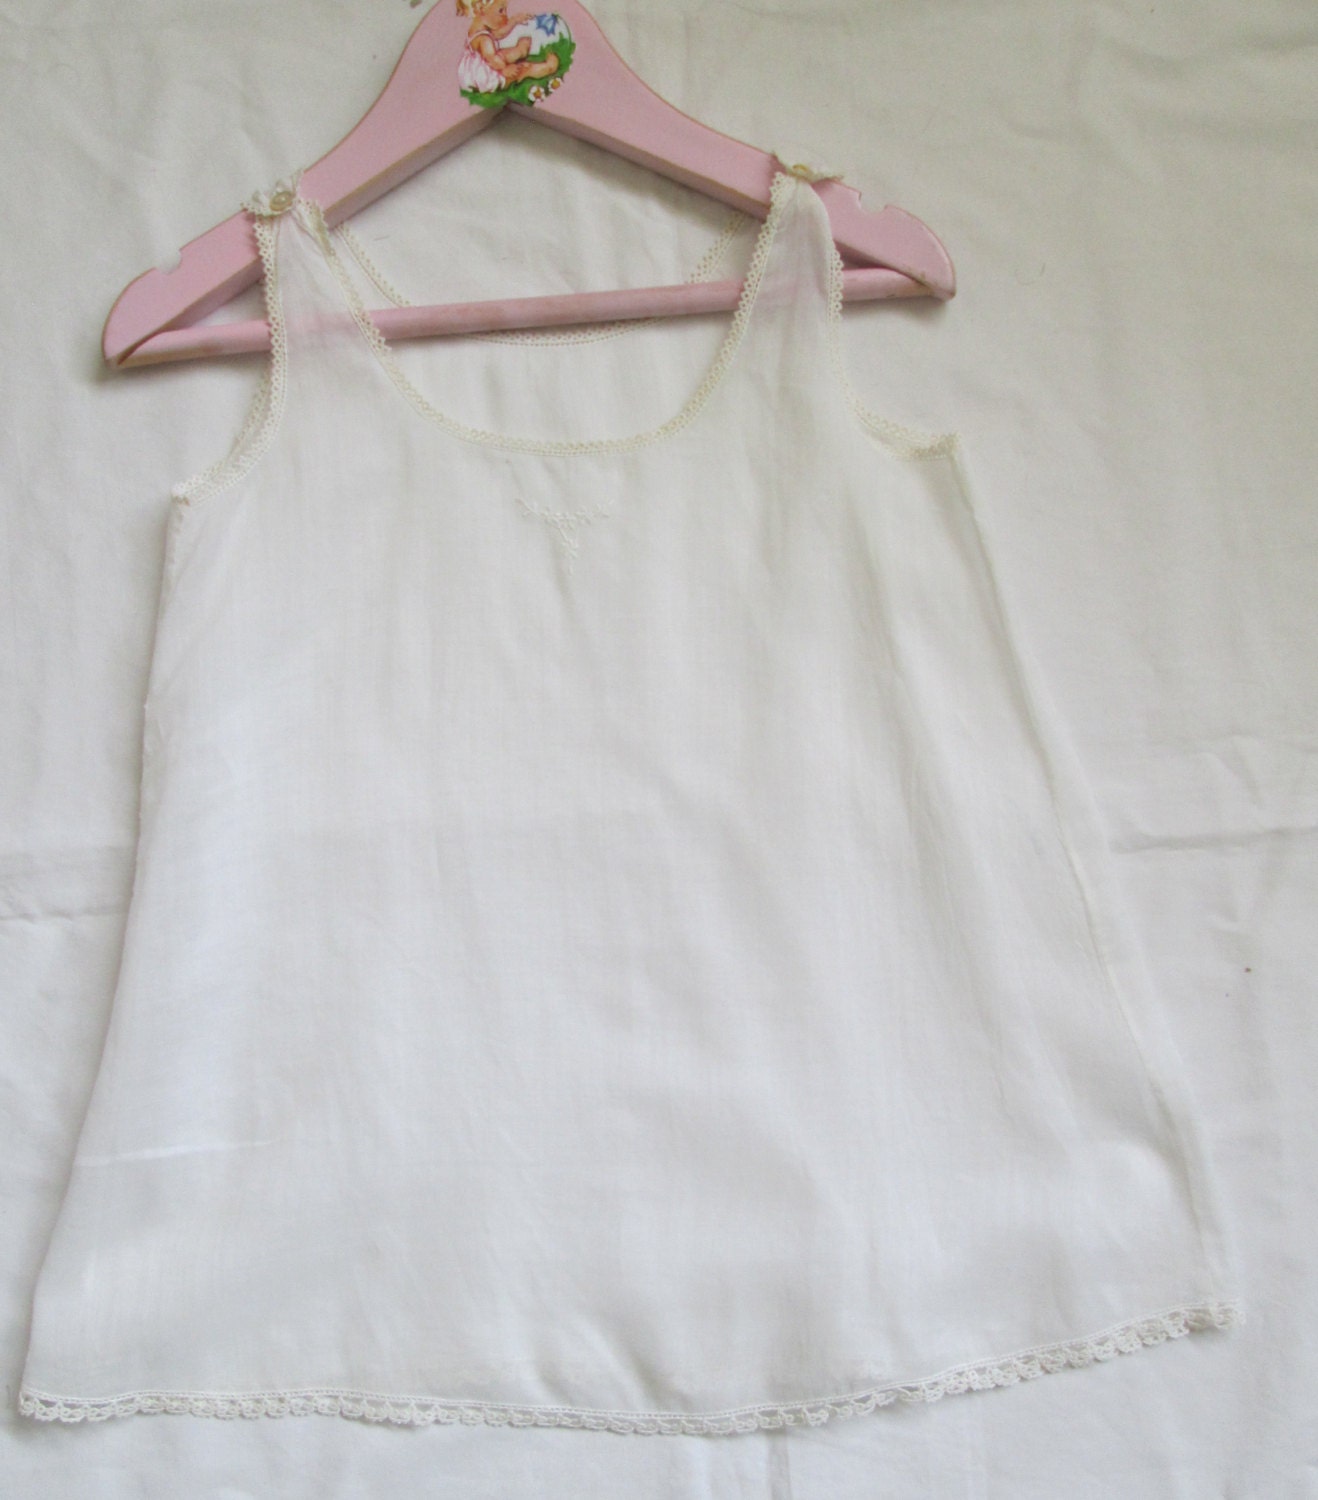 Vintage Baby Toddler Slip for Dress White Cotton Lawn Picot